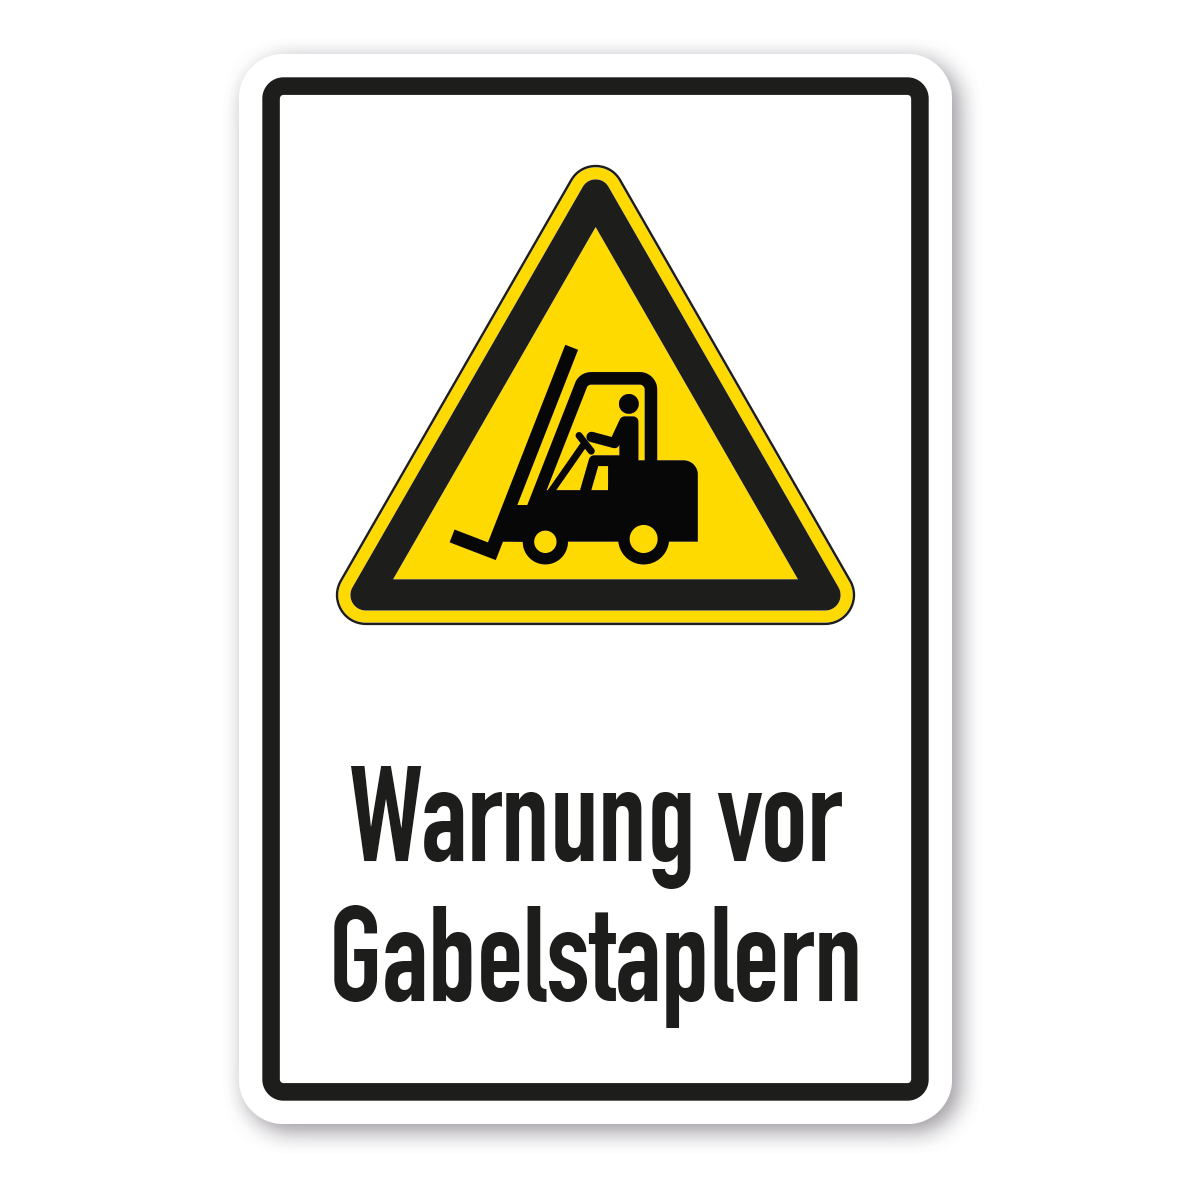 Schild Warnung vor Flurförderzeugen Gabel-Stapler ASR A1.3 DIN EN ISO 7010 W014 